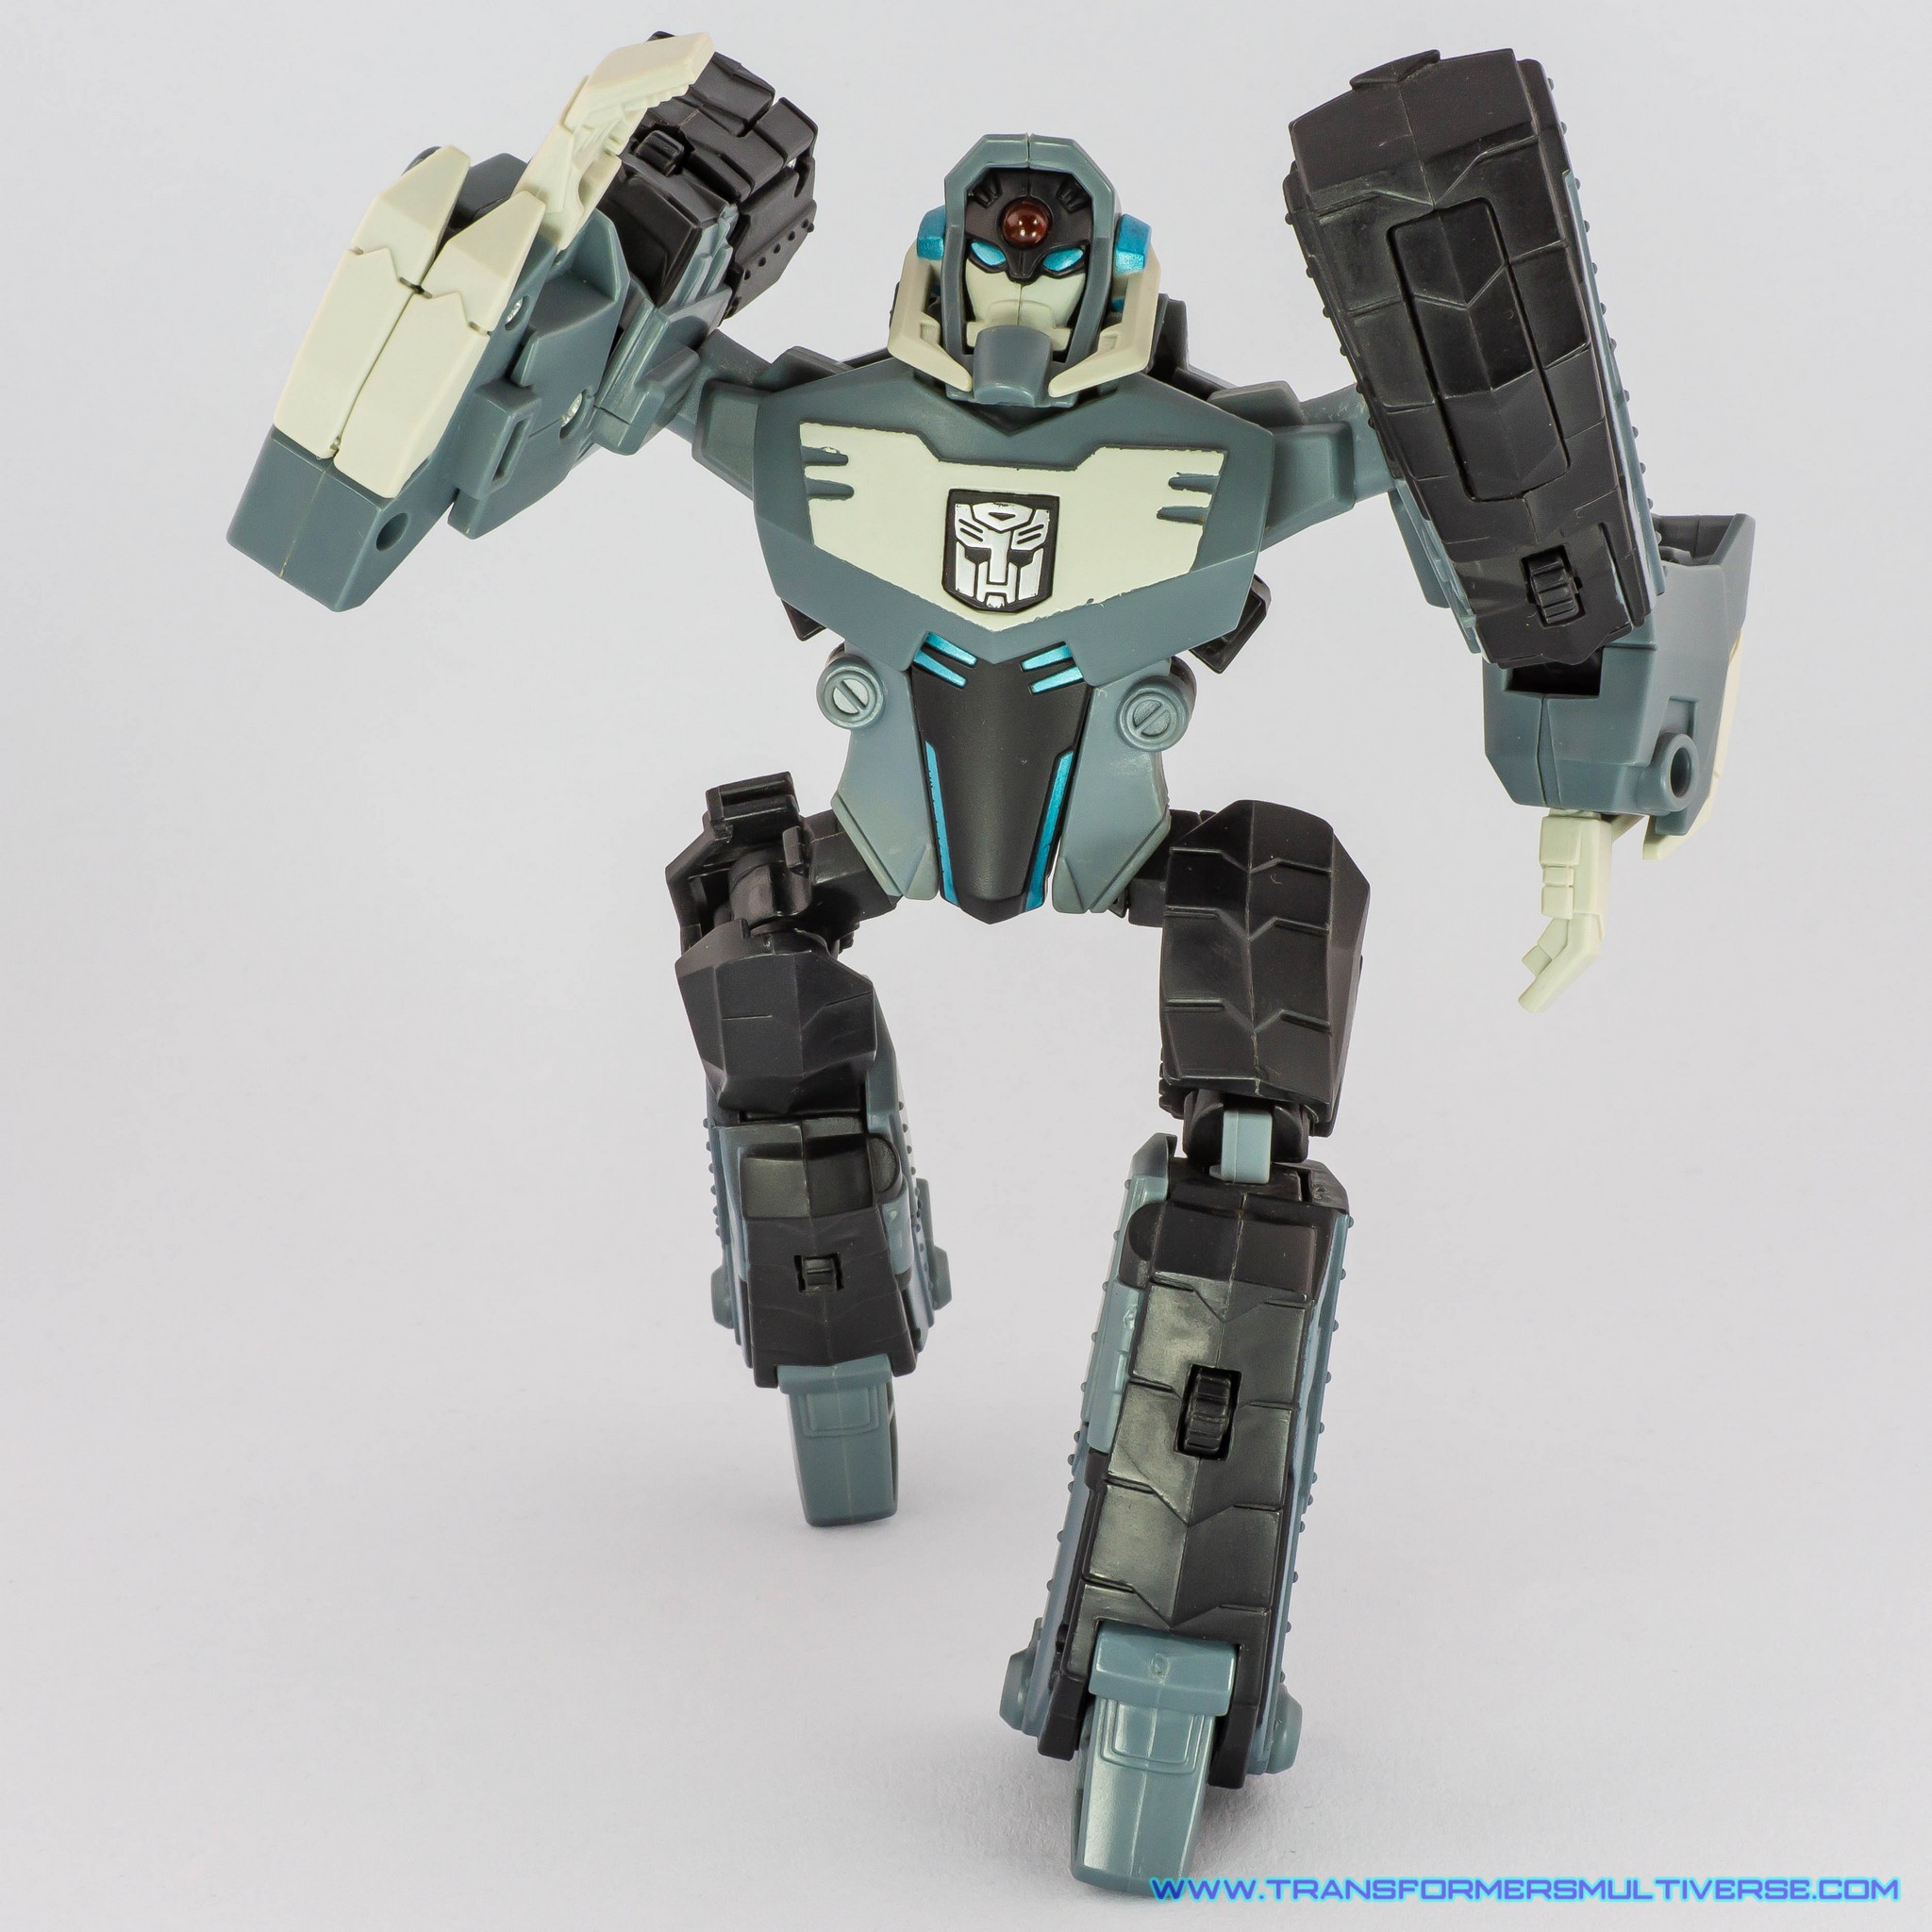 Transformers Animated Shockwave as Longarm Prime robot mode, alternate pose